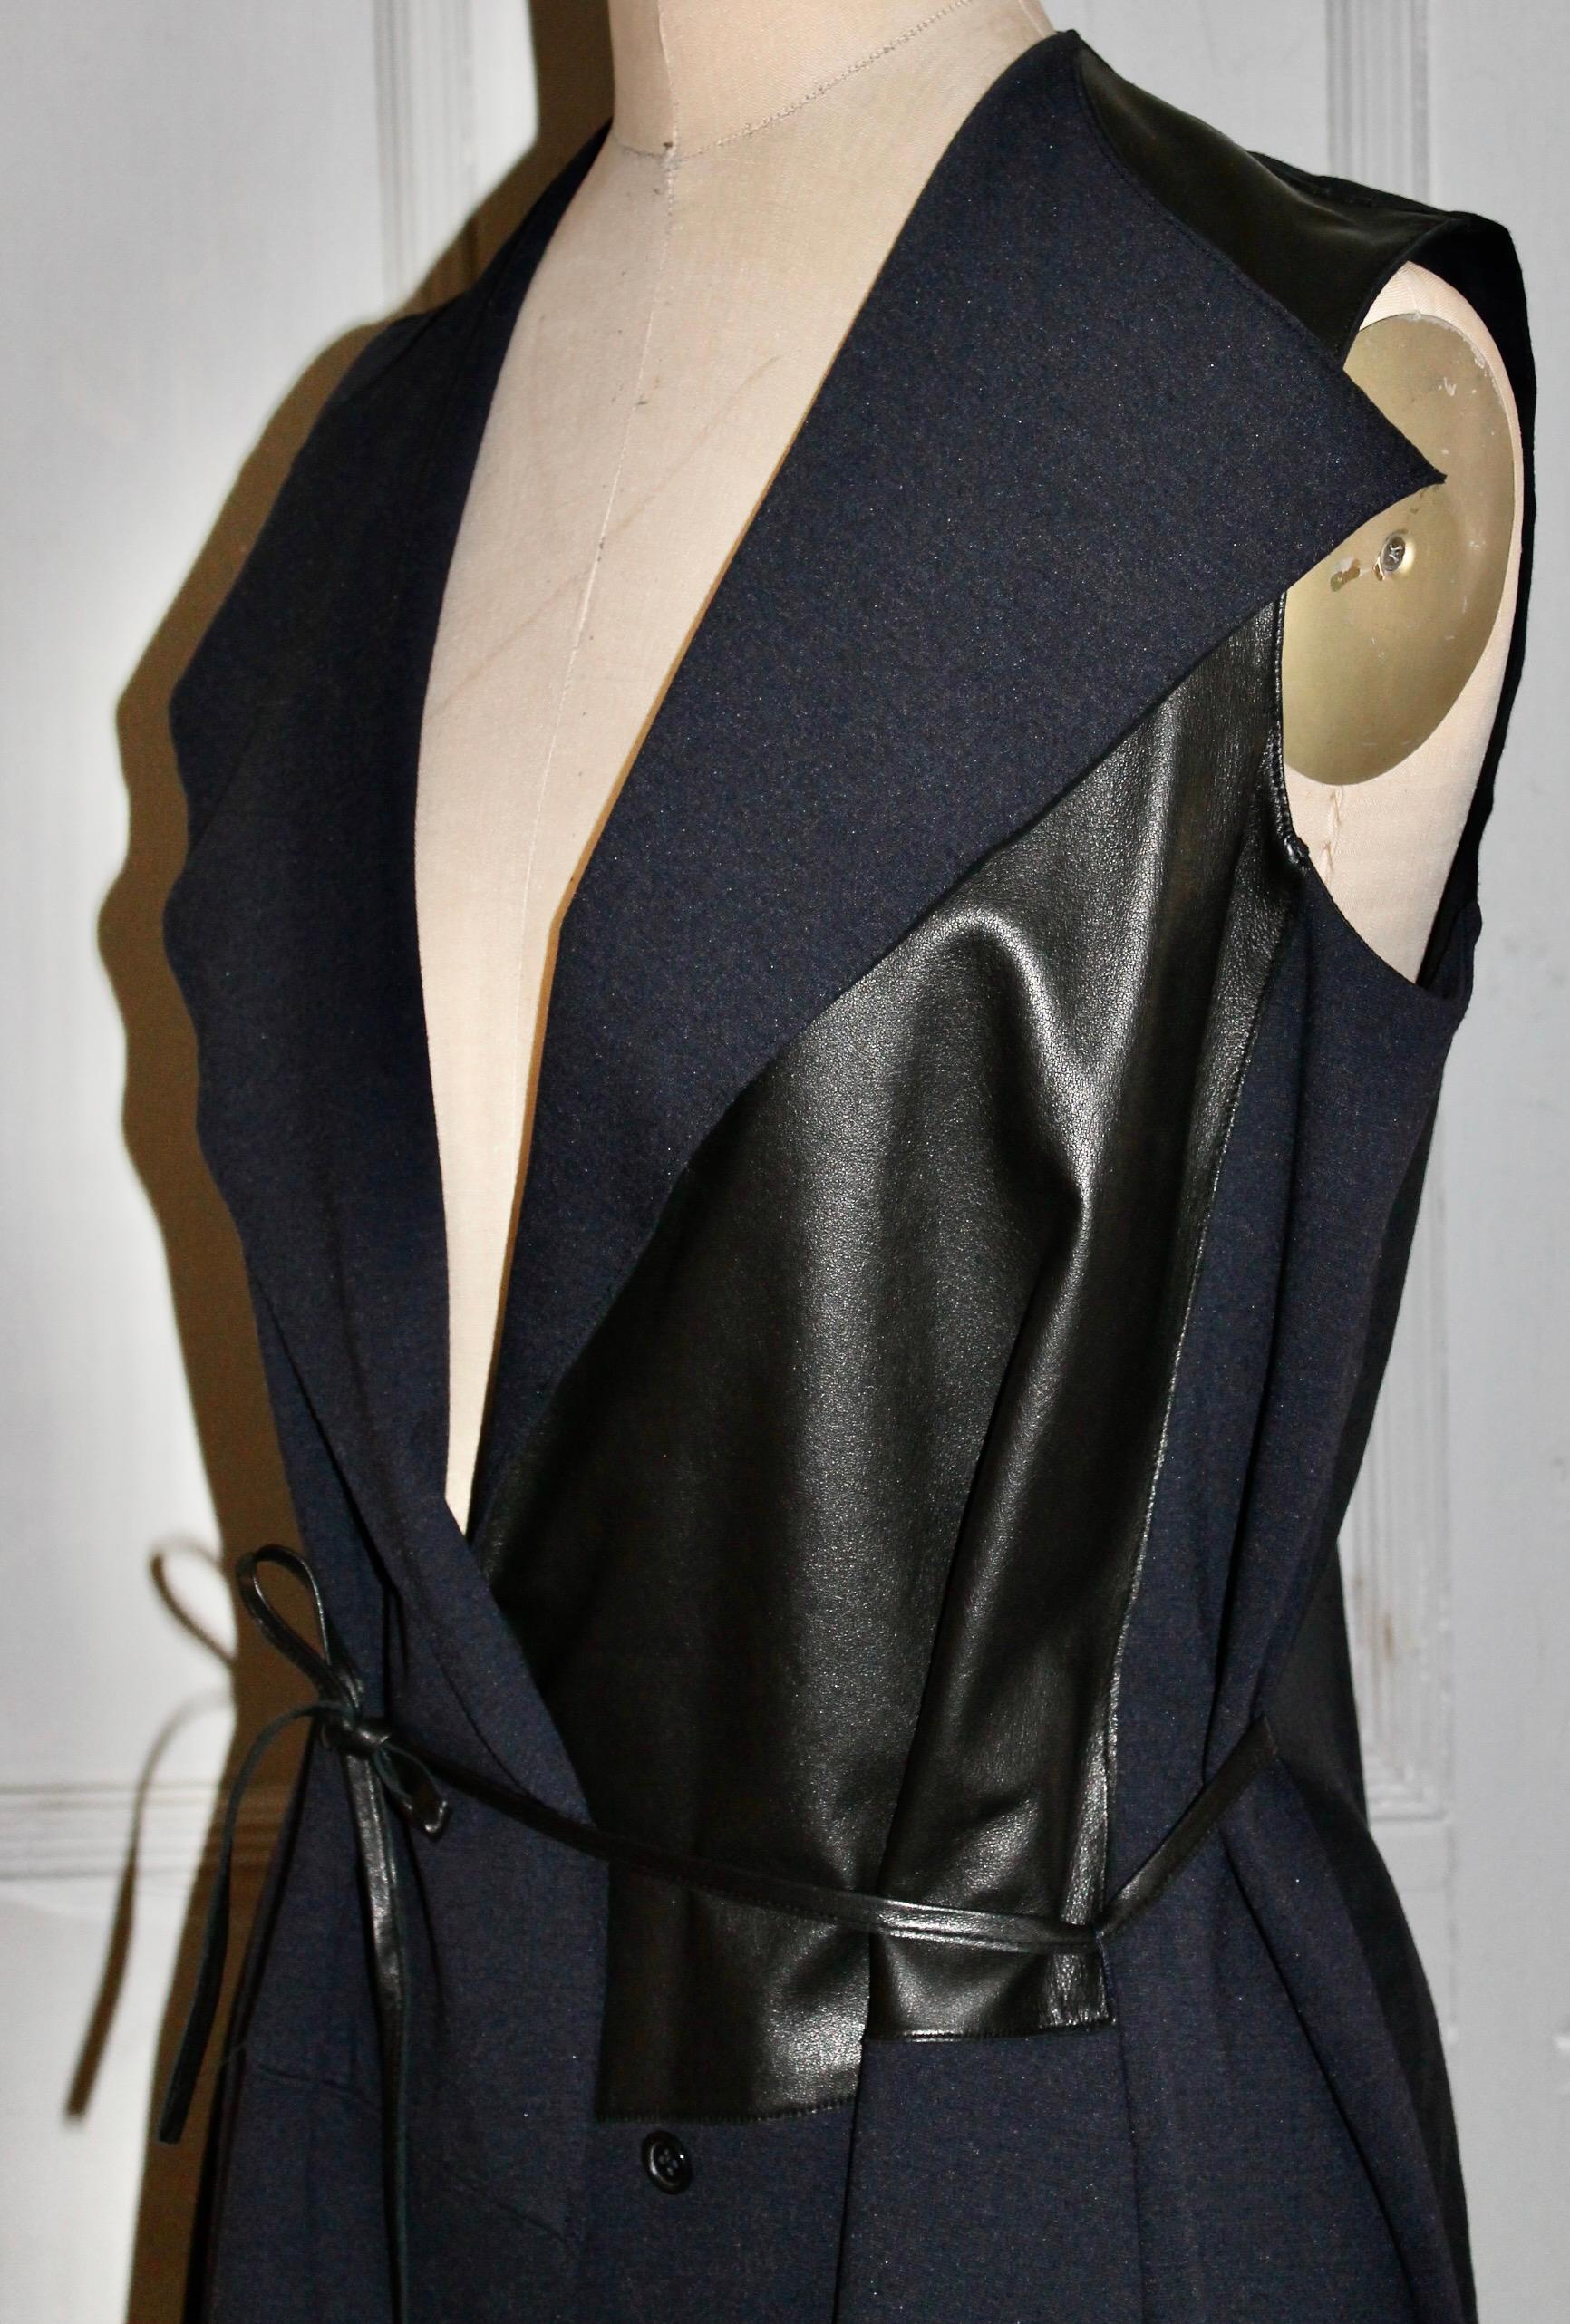 Yohji Yamamoto Black Leather Coat Dress For Sale 4